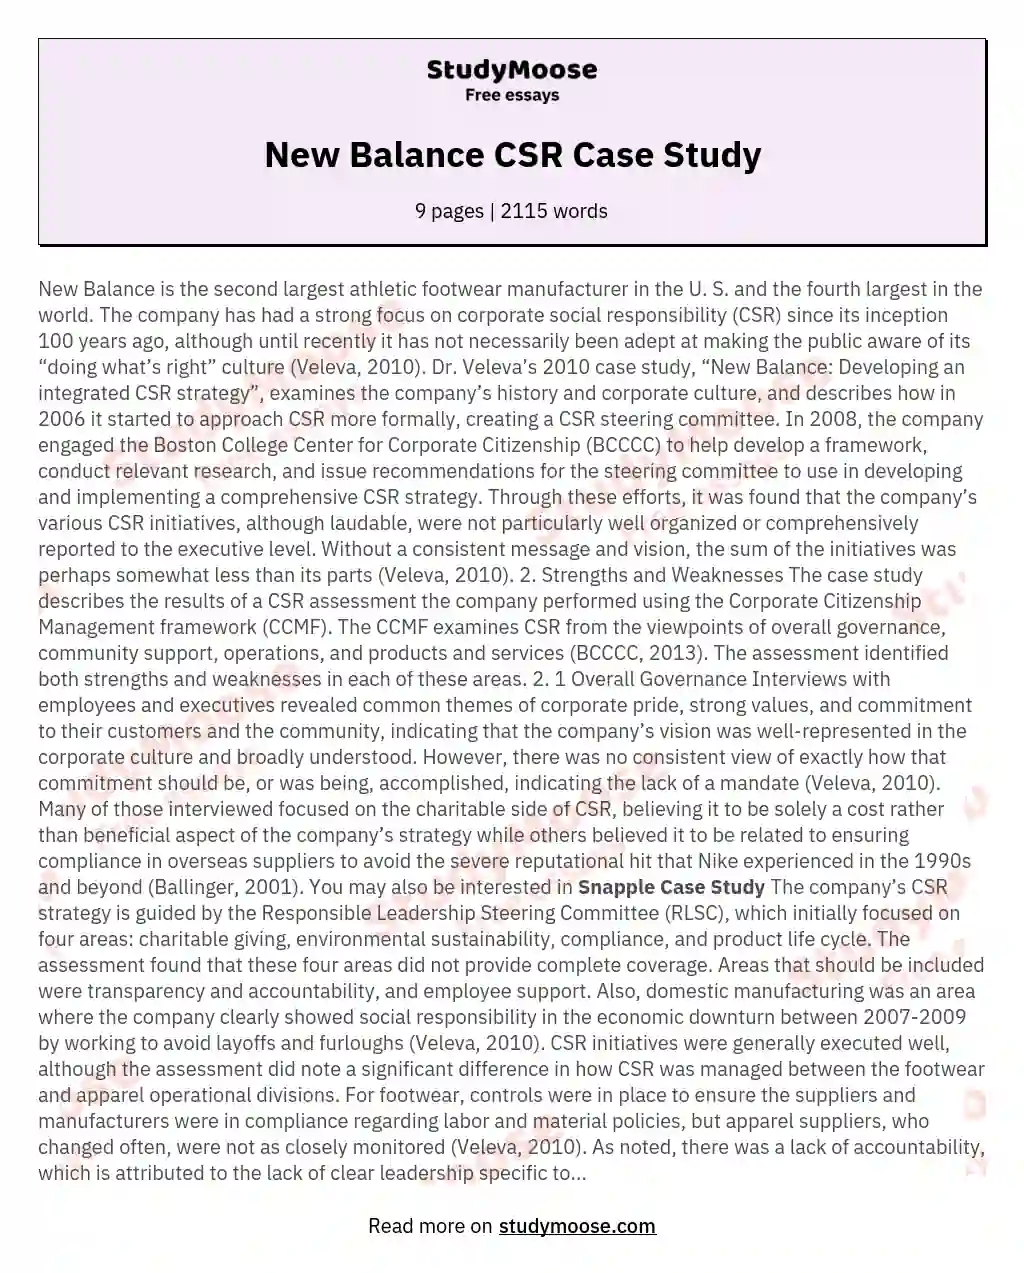 New Balance CSR Case Study essay